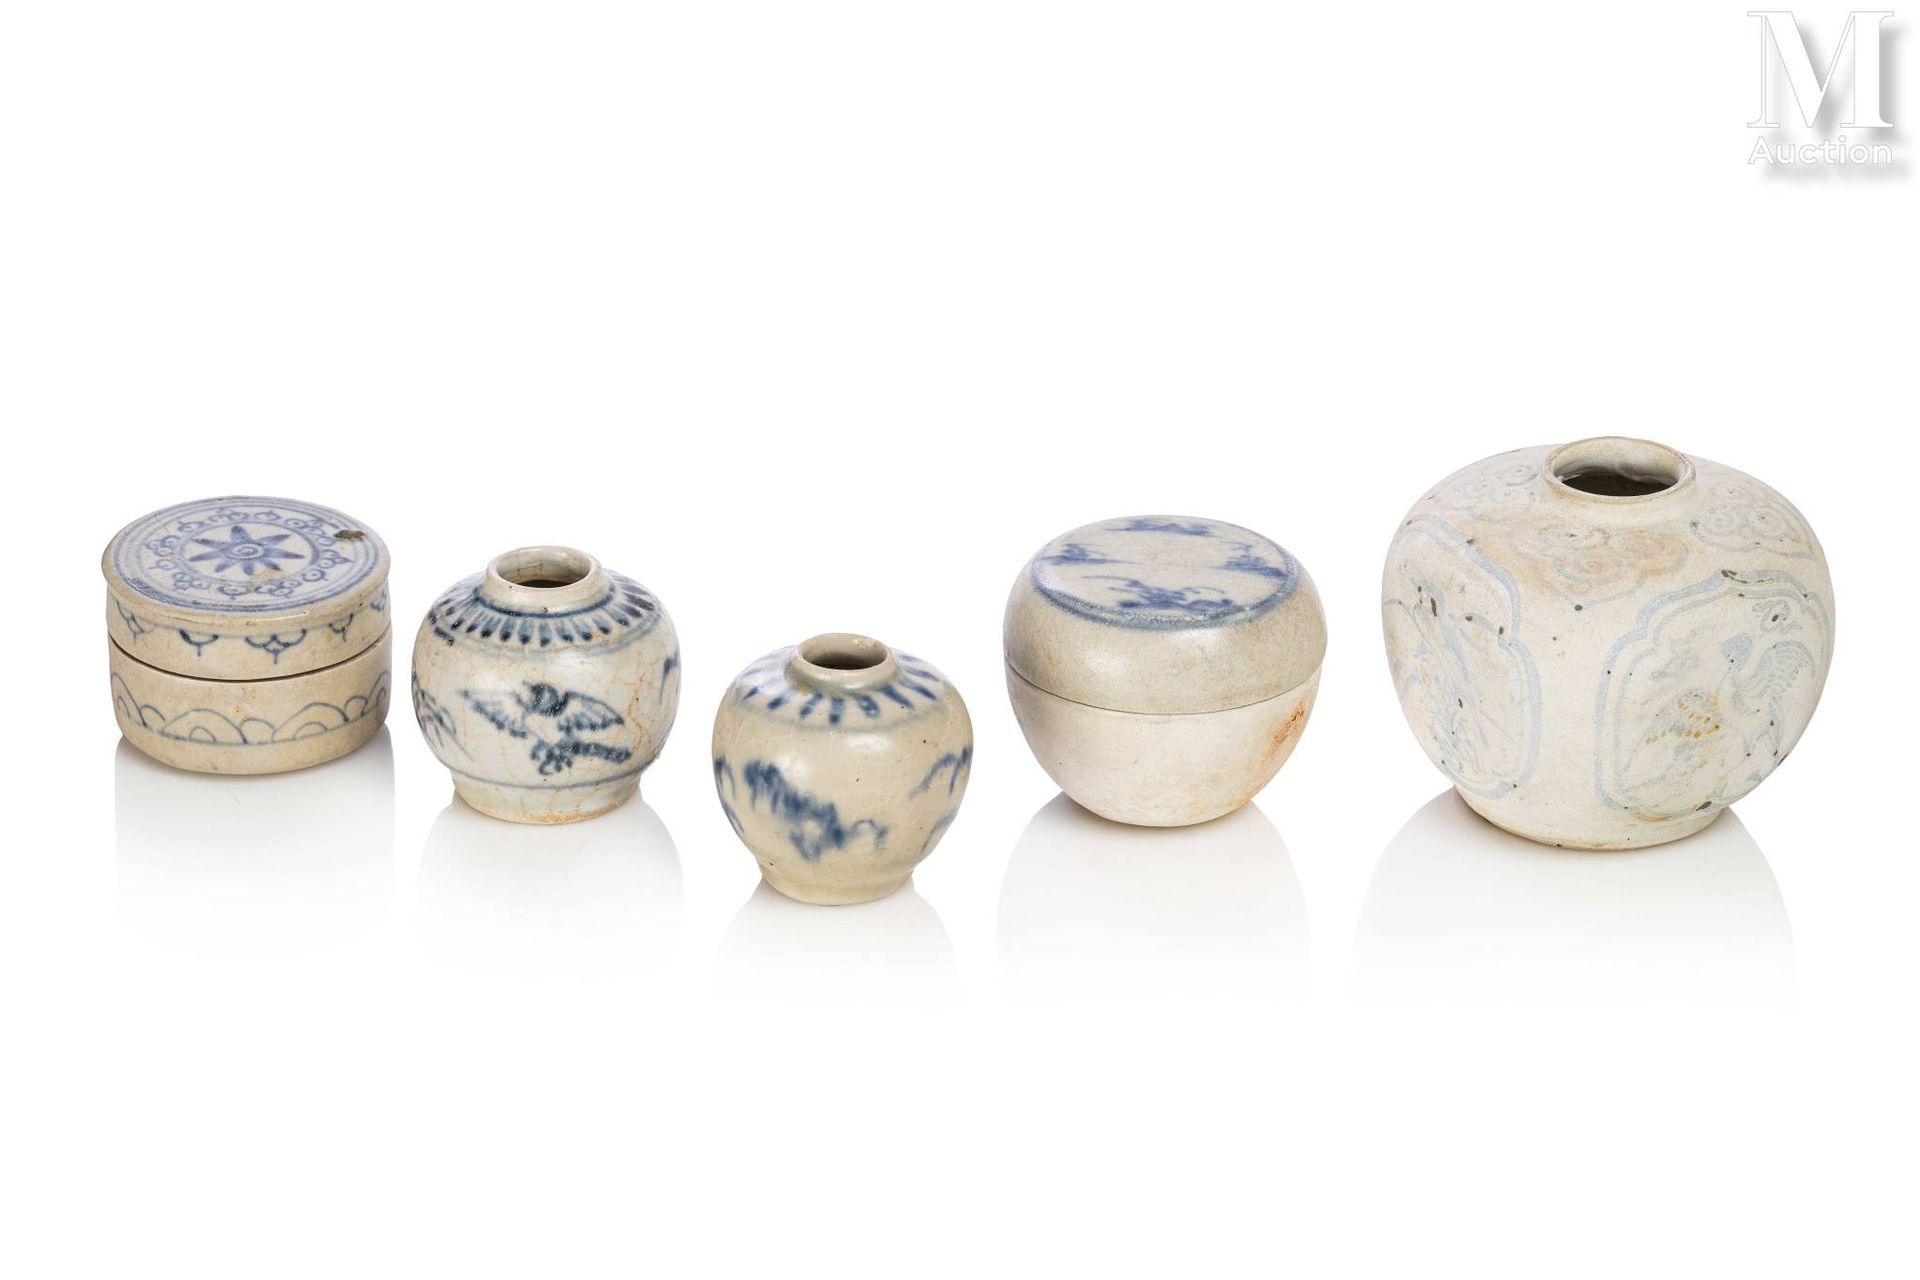 VIETNAM, XVe siècle 一系列的石器作品

包括两个小球状花瓶，一个四角形花瓶和两个盒子，有釉下钴蓝装饰。
高度：3.5和6厘米之间

出处："&hellip;